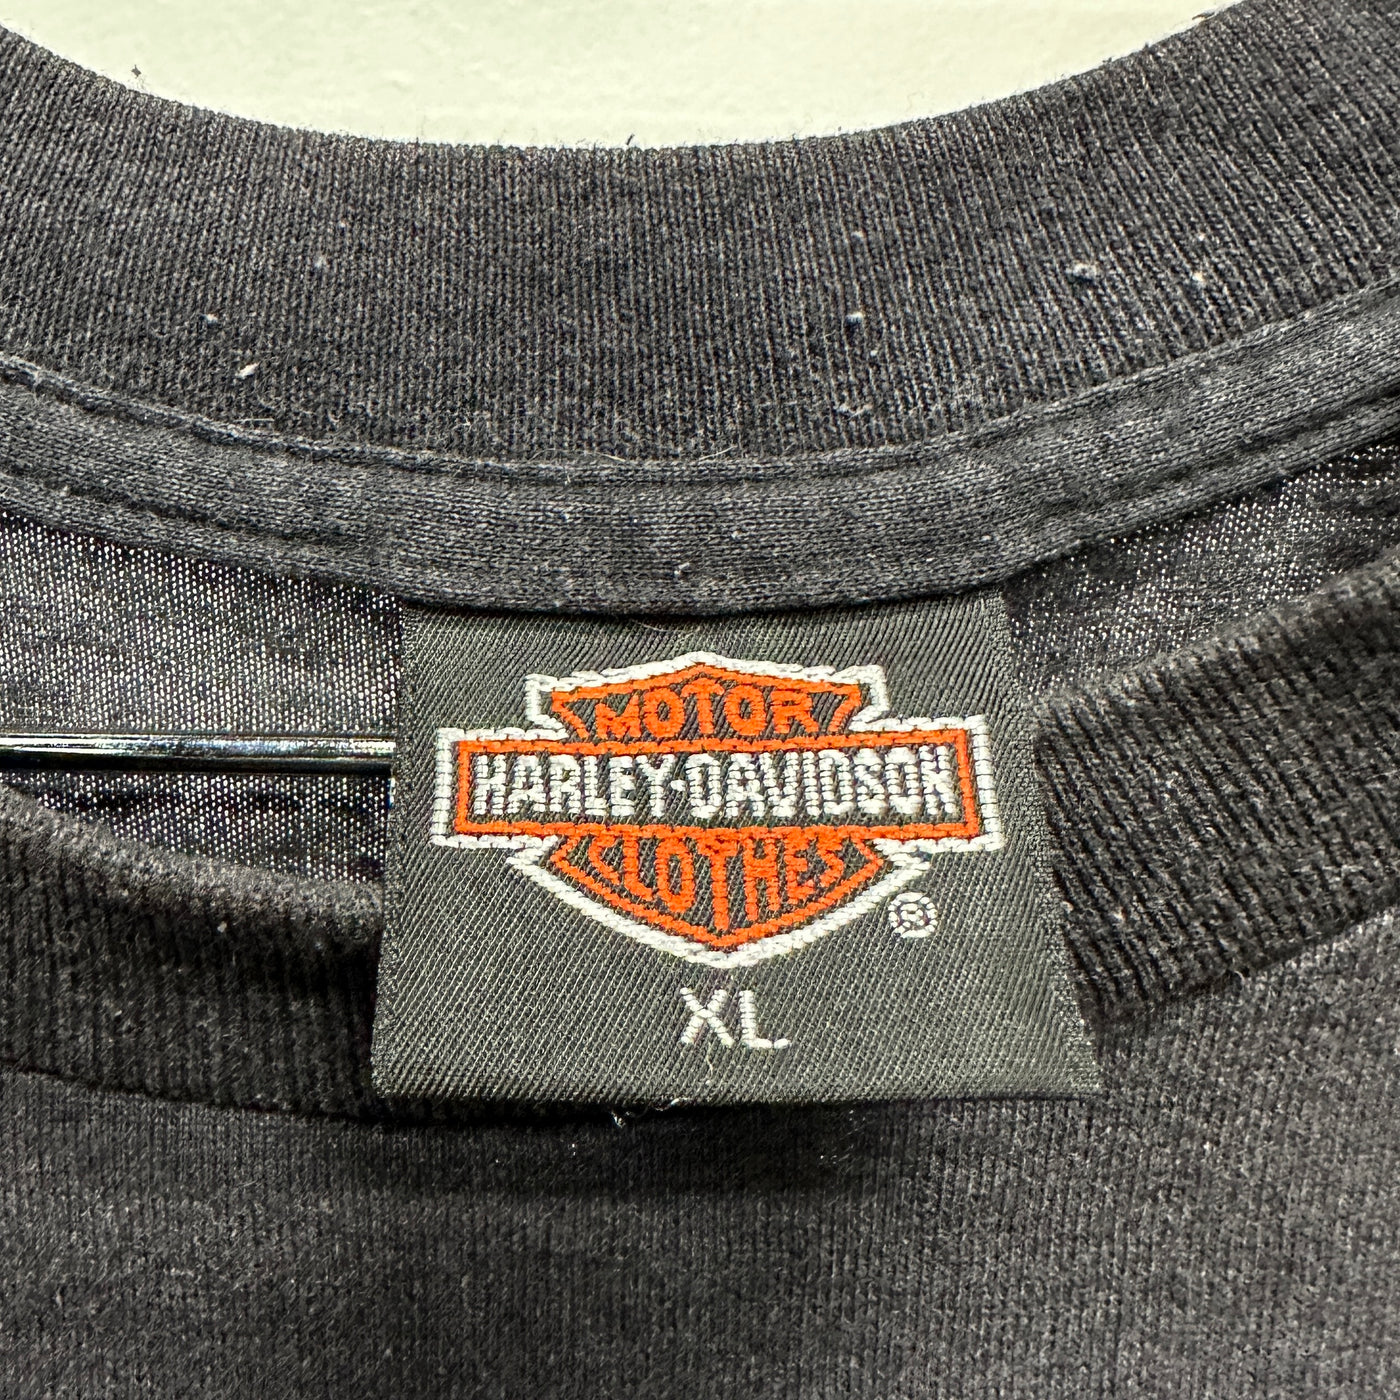 '91 Harley Davidson 3D Emblem Panther Black T-shirt sz XL